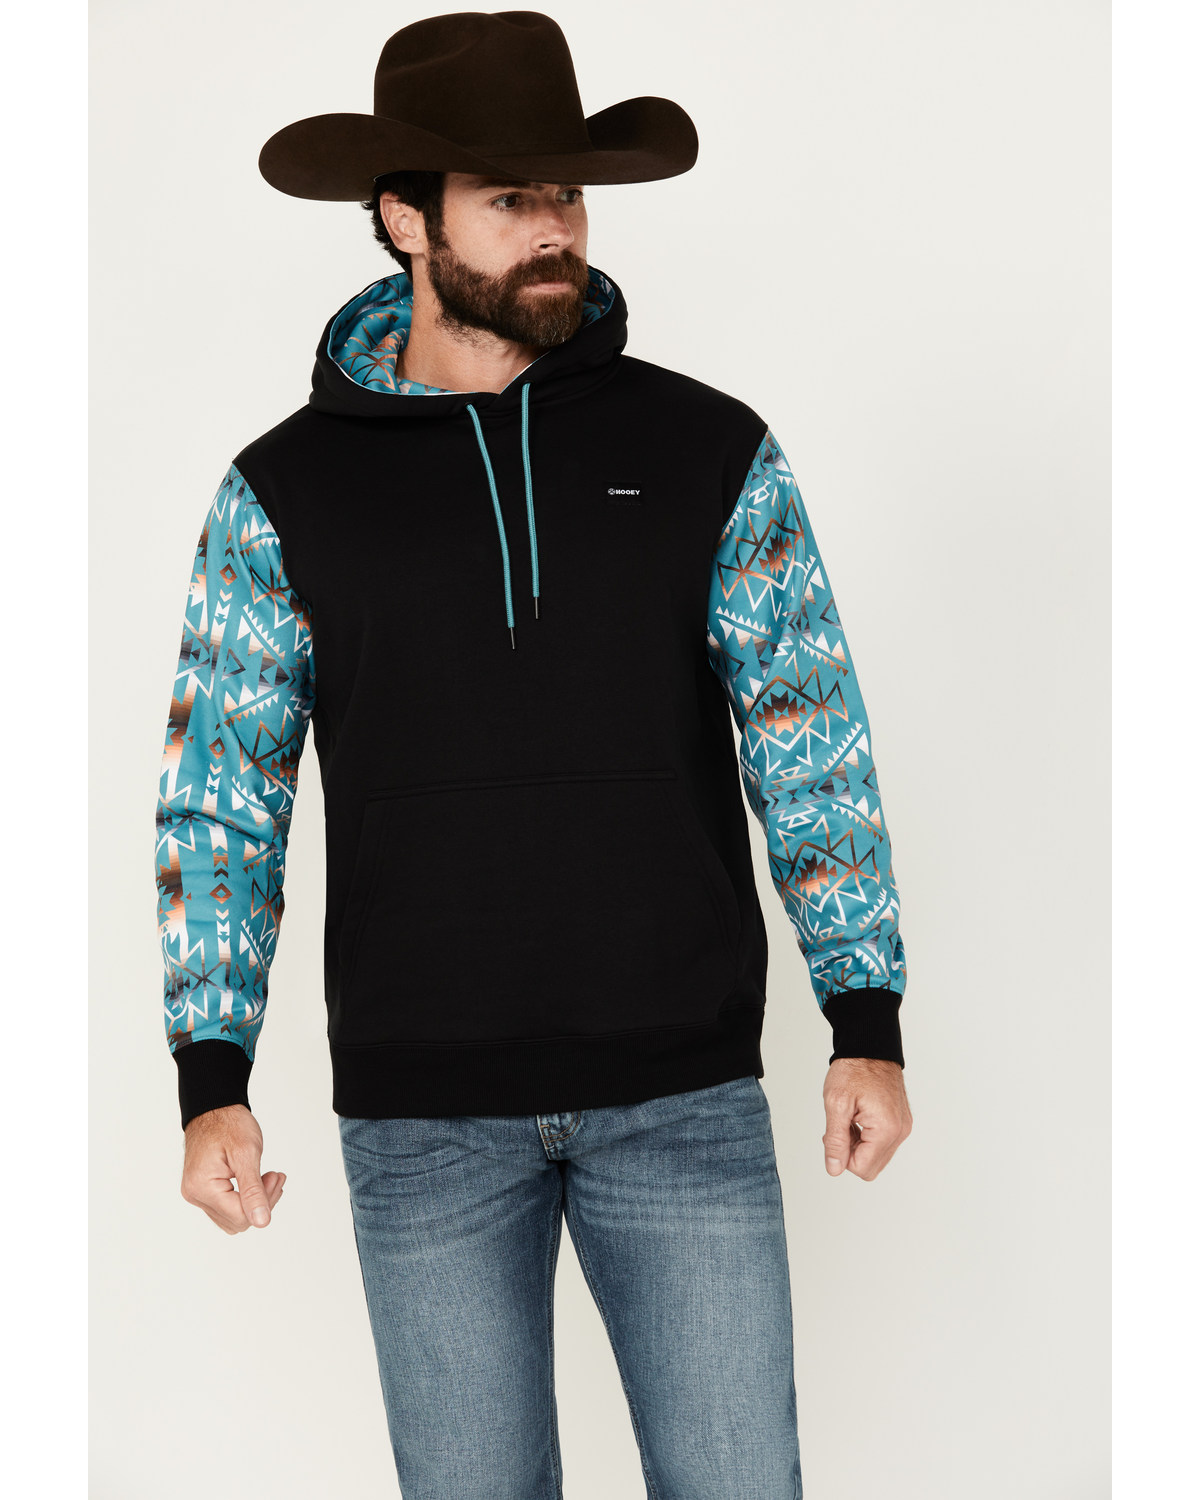 Hooey Men's Boot Barn Exclusive Southwestern Color Block Hooded Sweatshirt